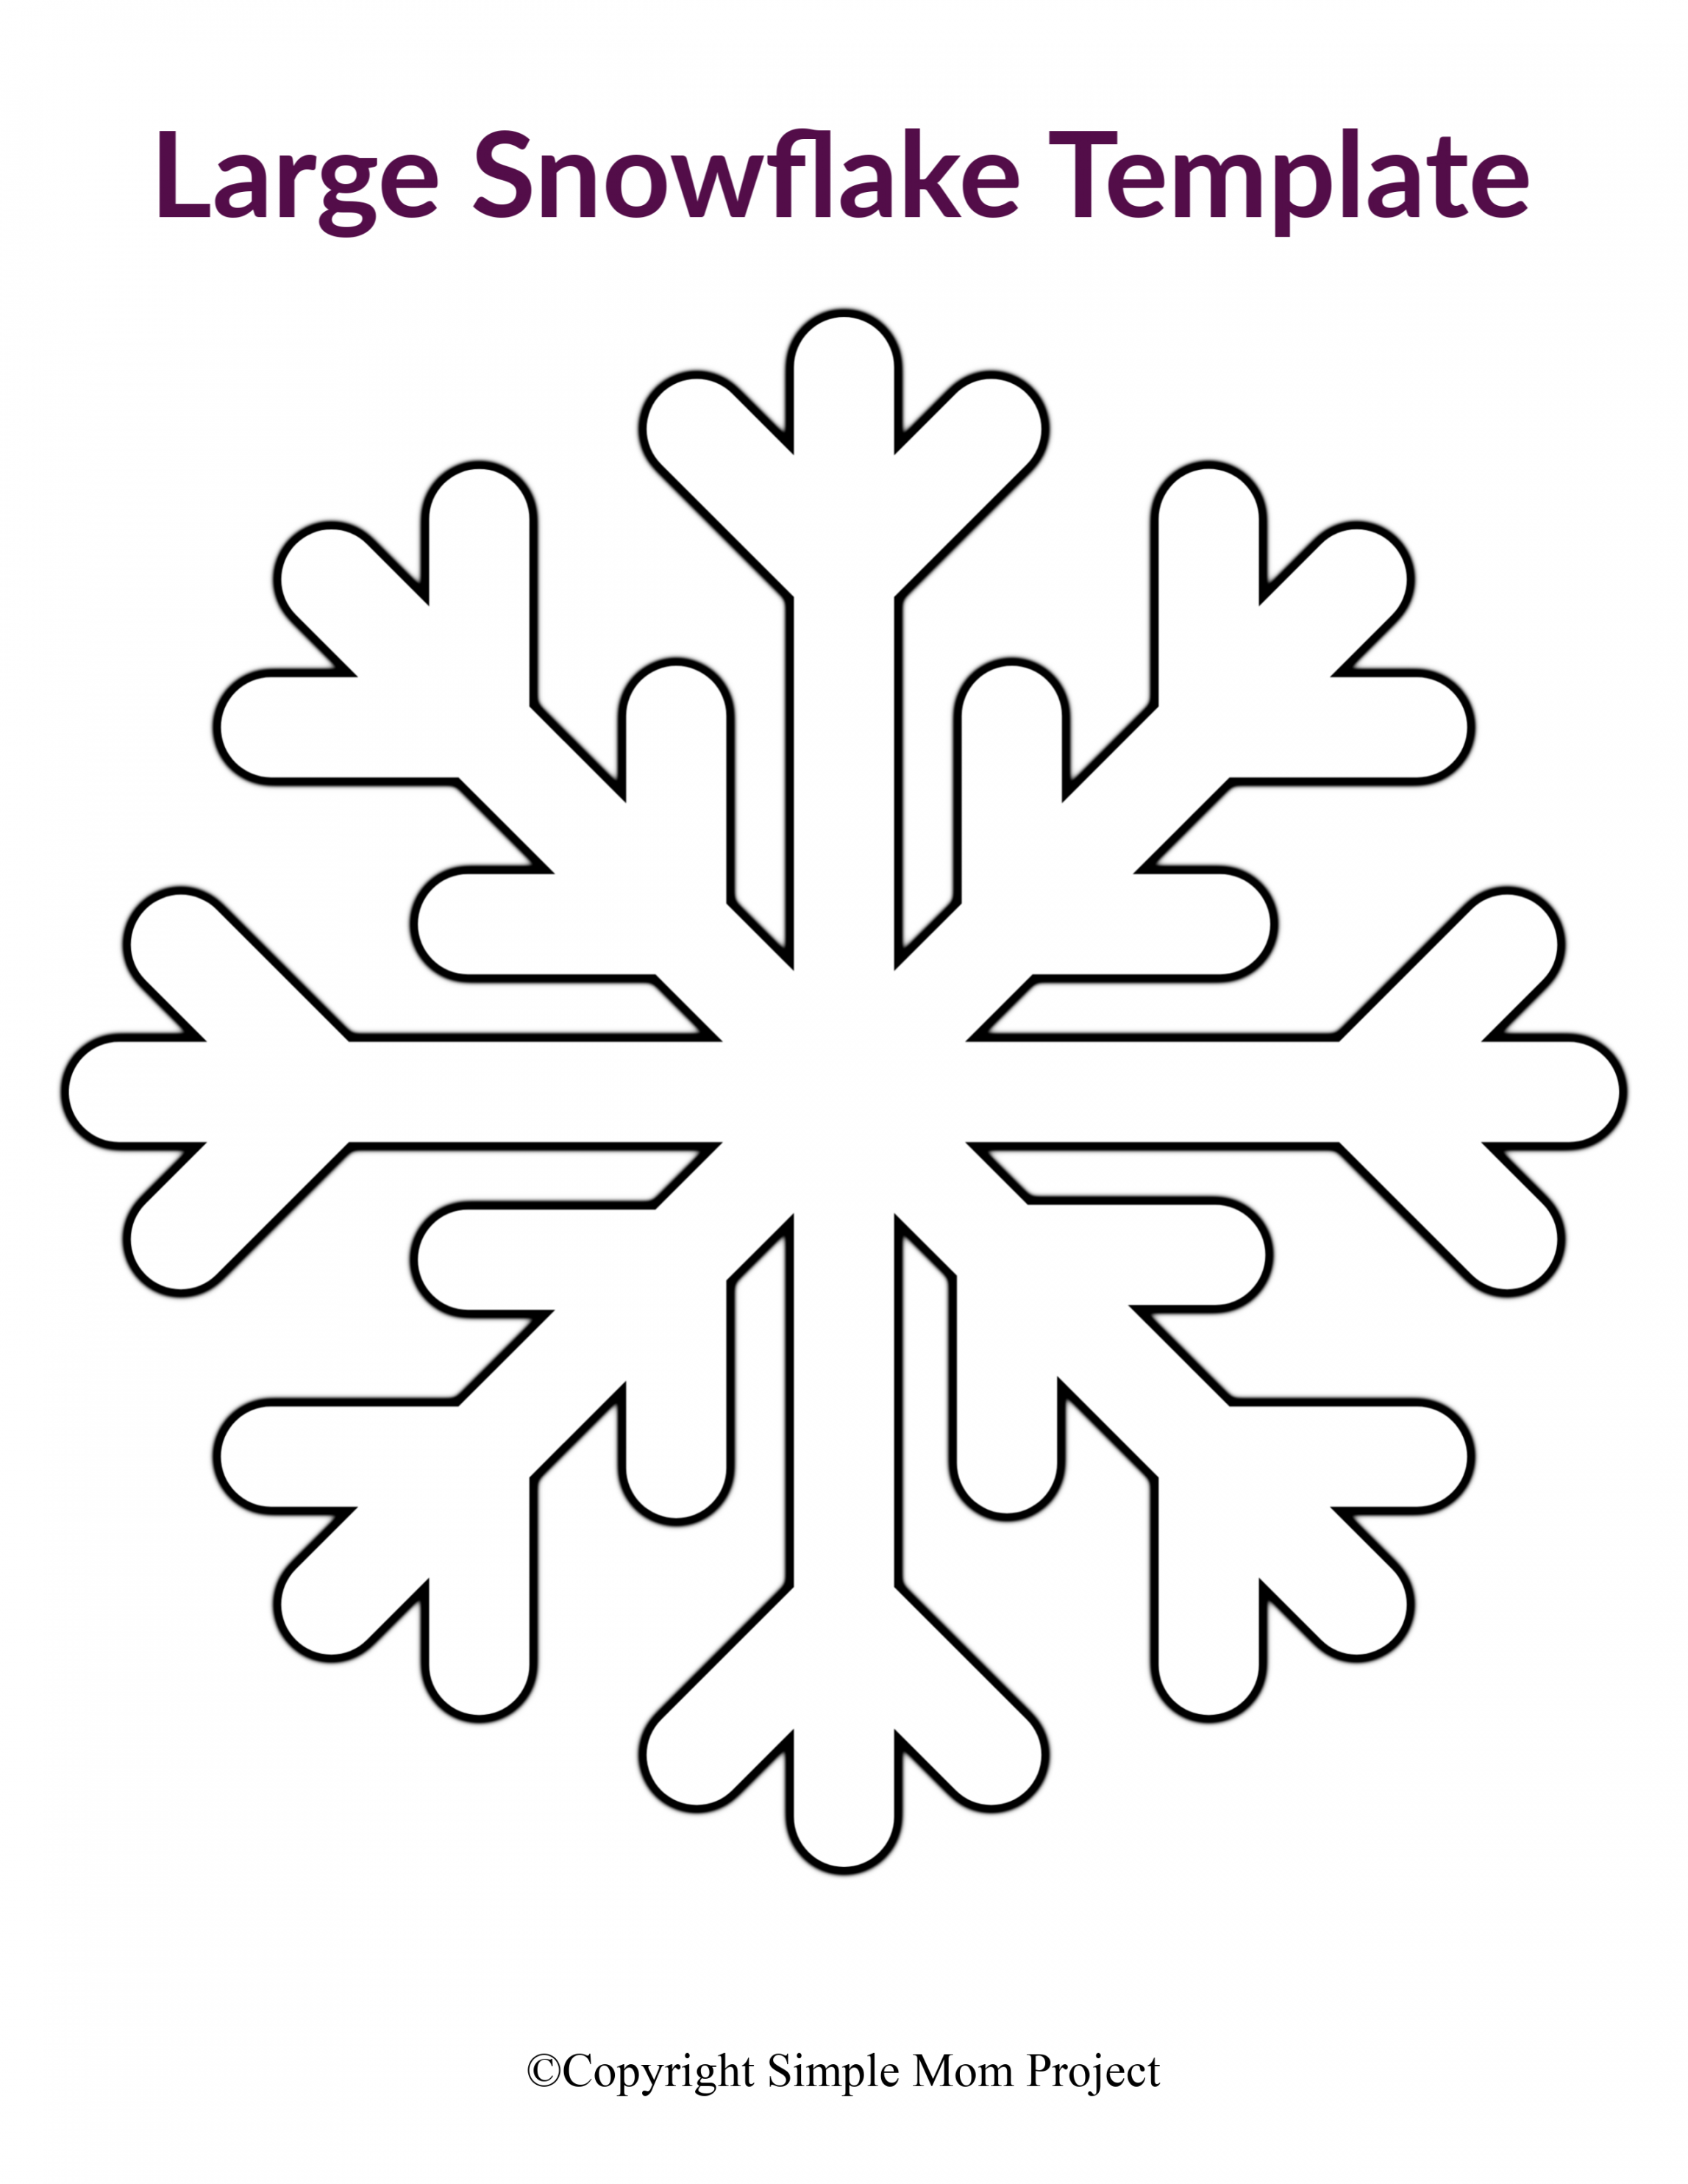 Free Printable Large Snowflake Templates - Simple Mom Project - FREE Printables - Snowflake Print